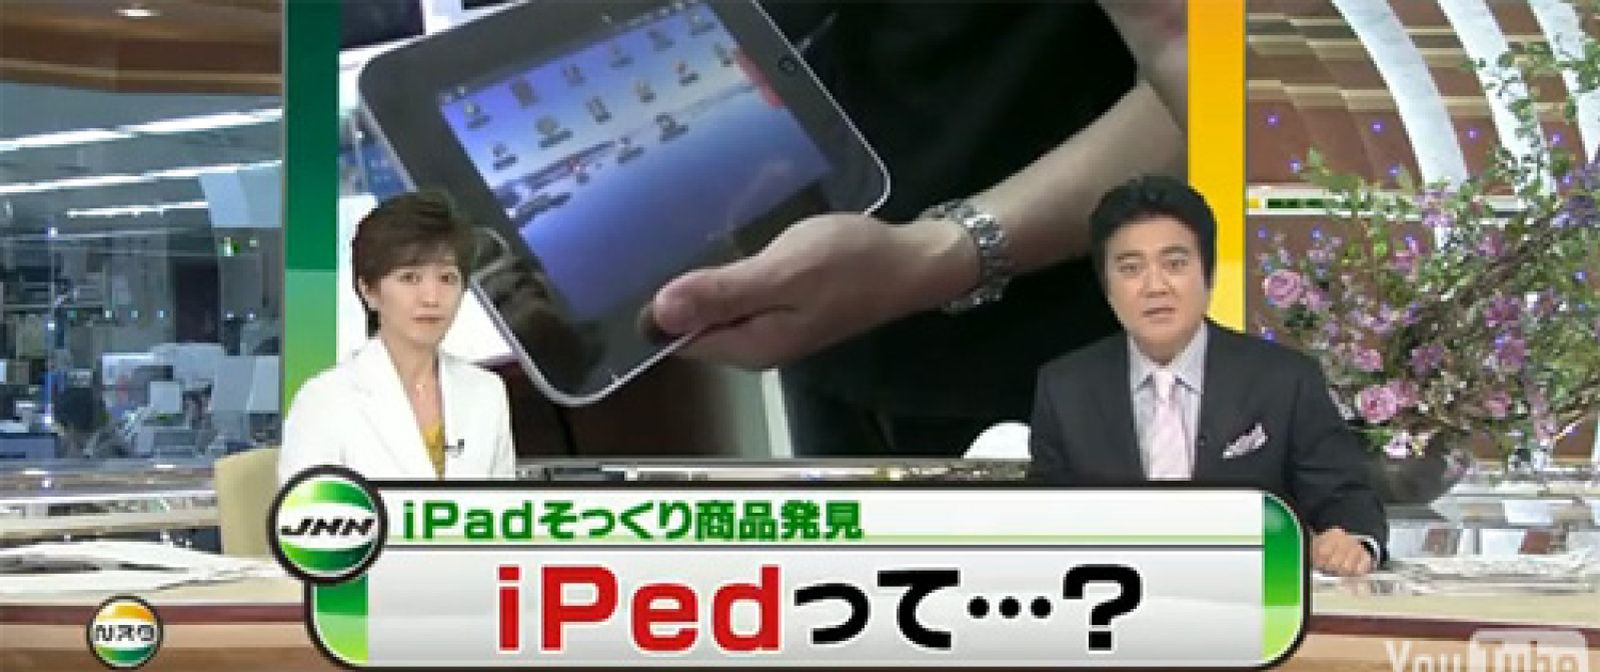 Foto: iPed, el 'iPad' chino